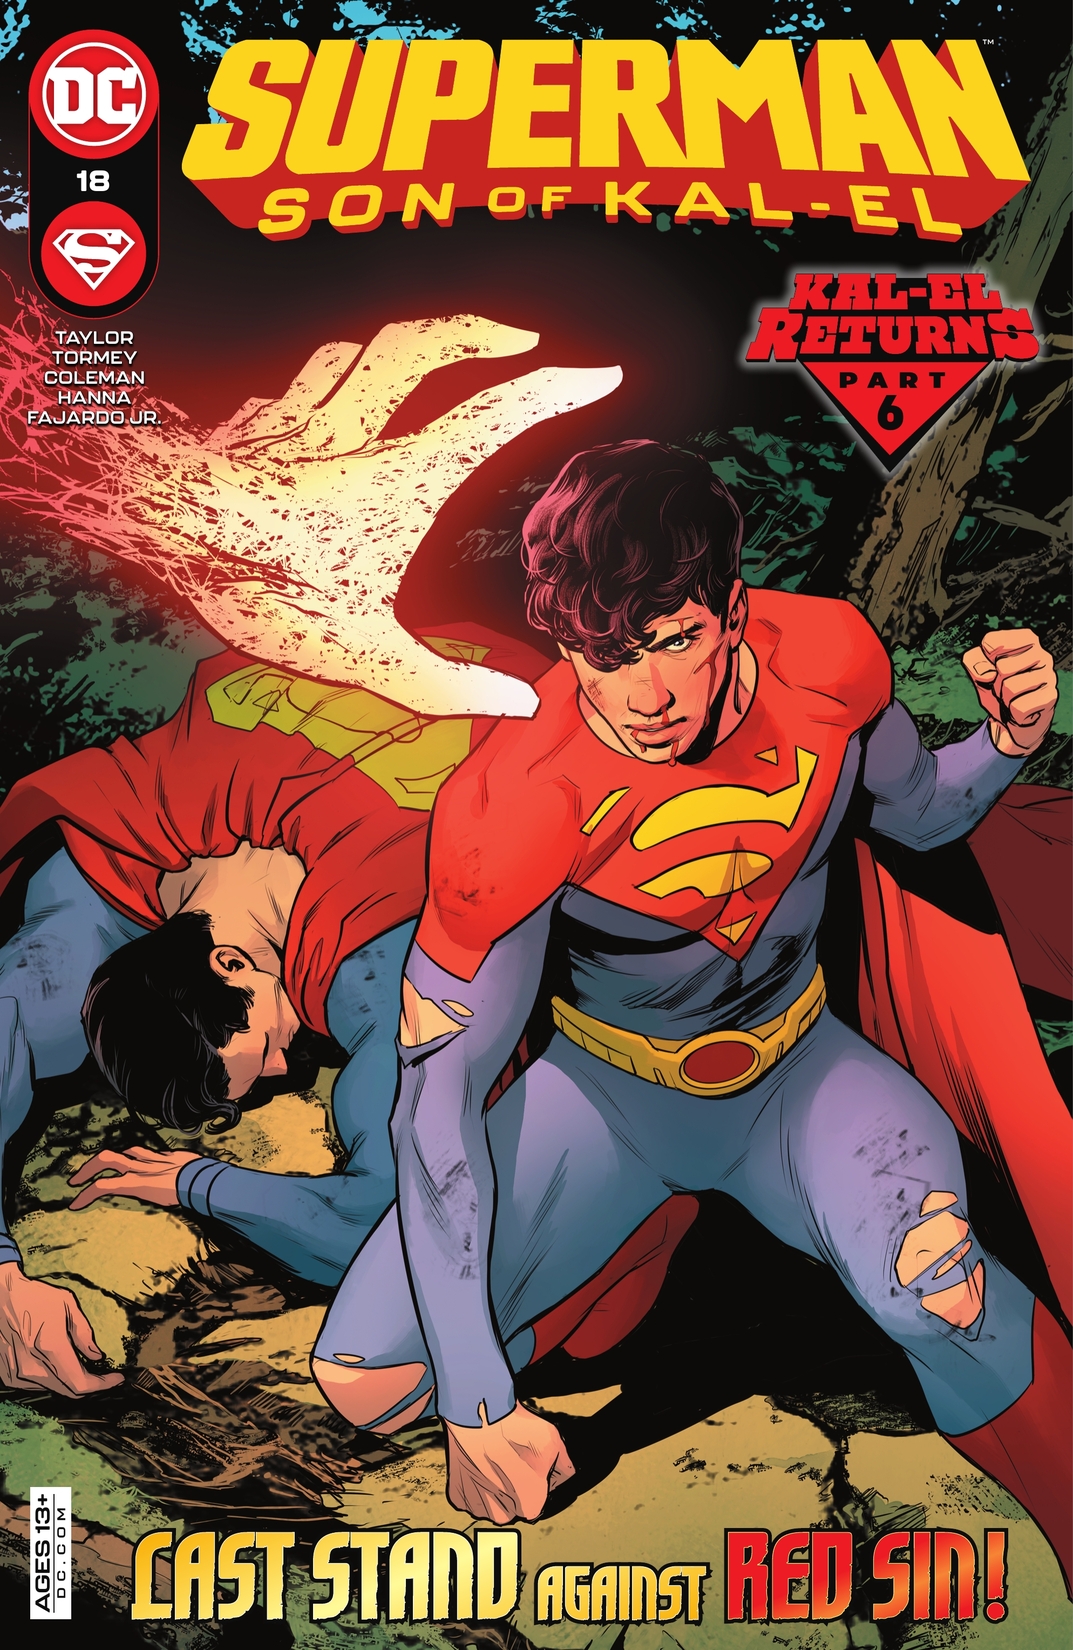 Superman: Son of Kal-El #18 preview images